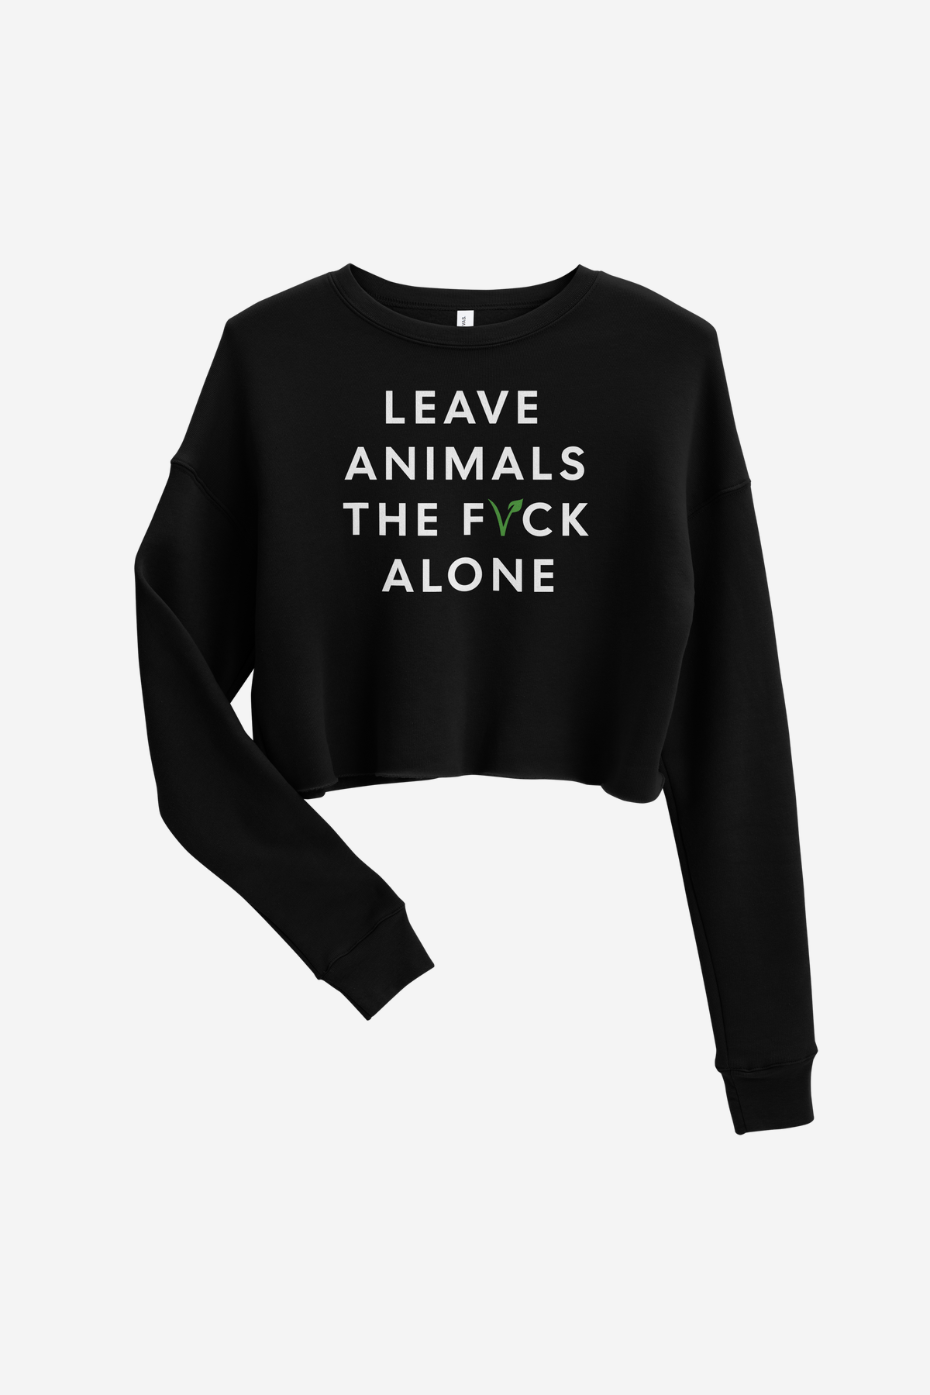 Leave Animals Alone Crop Sweatshirt